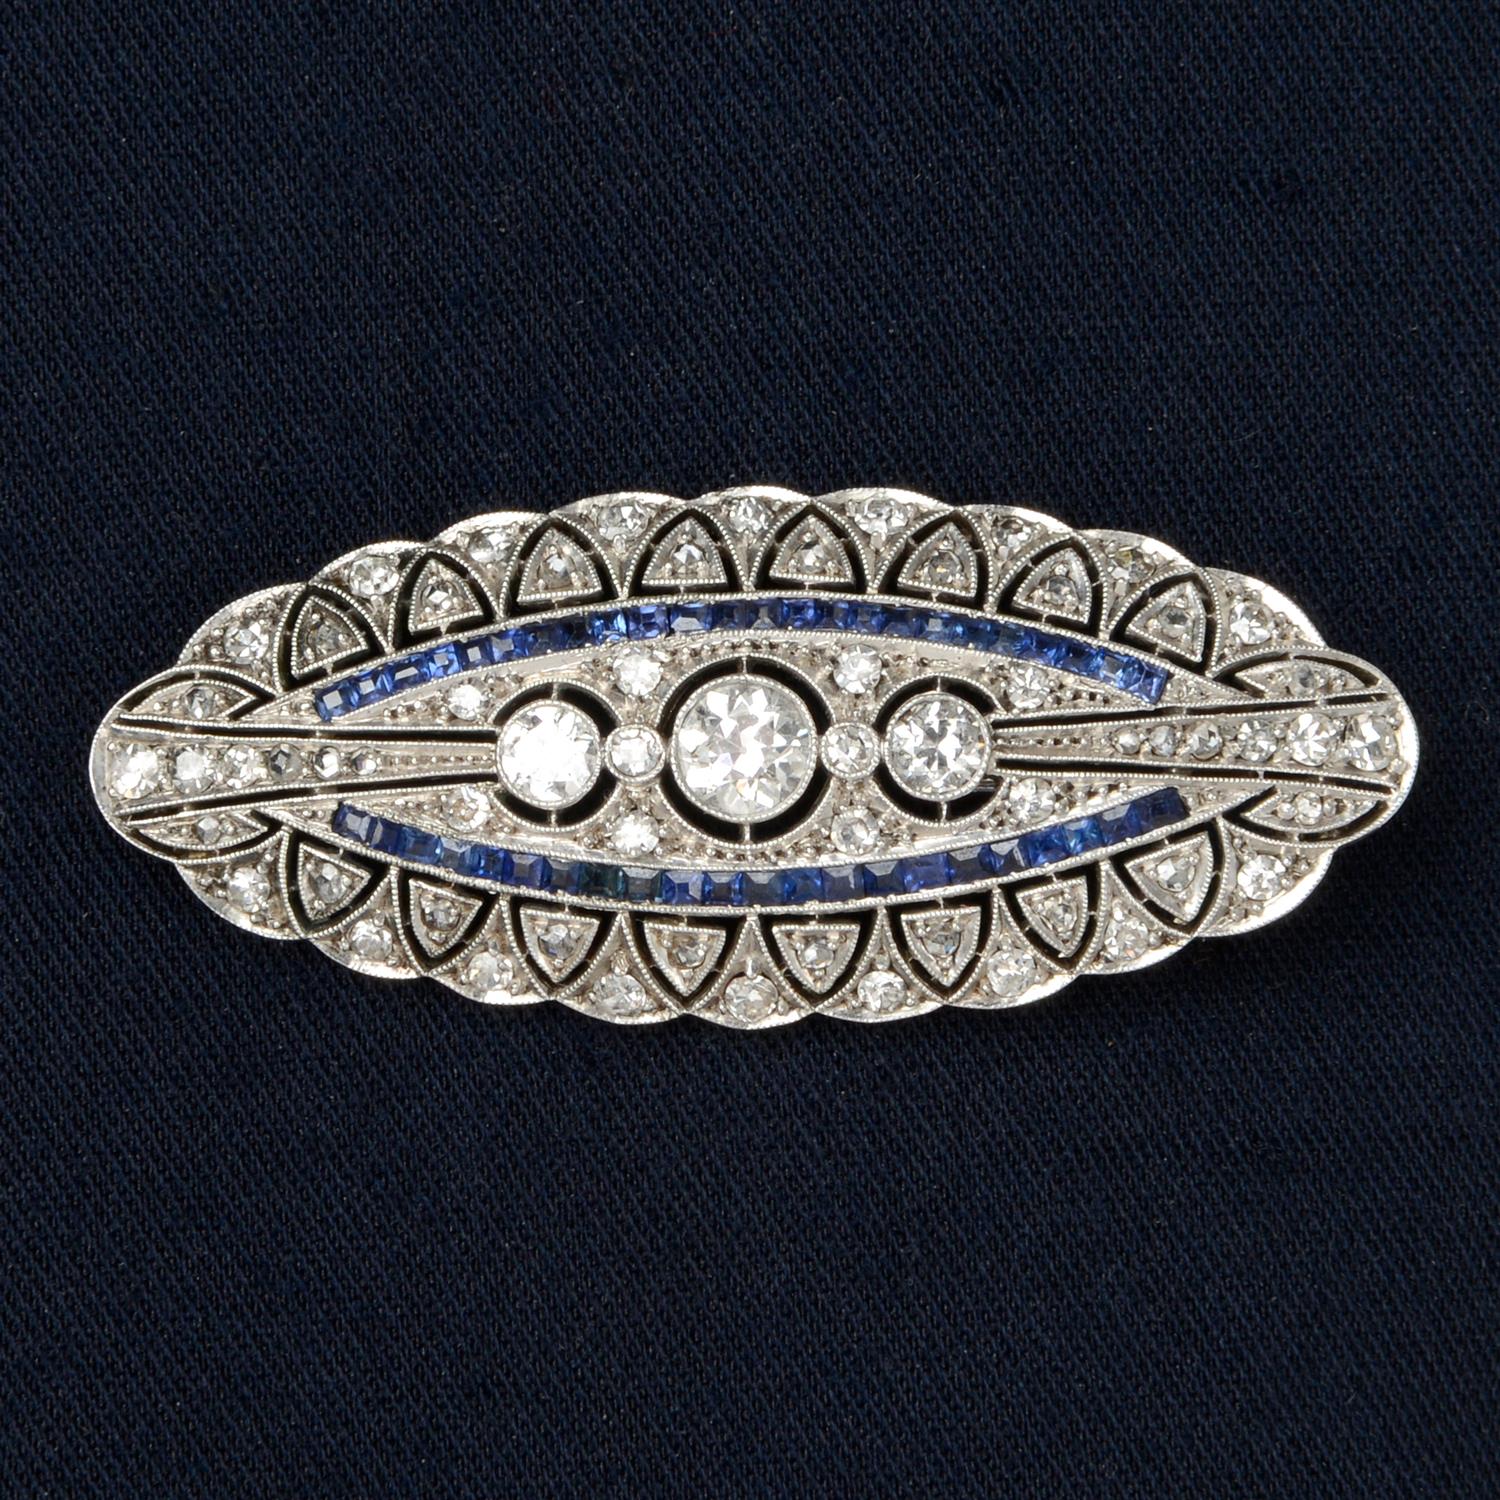 Mid 20th century diamond and sapphire brooch